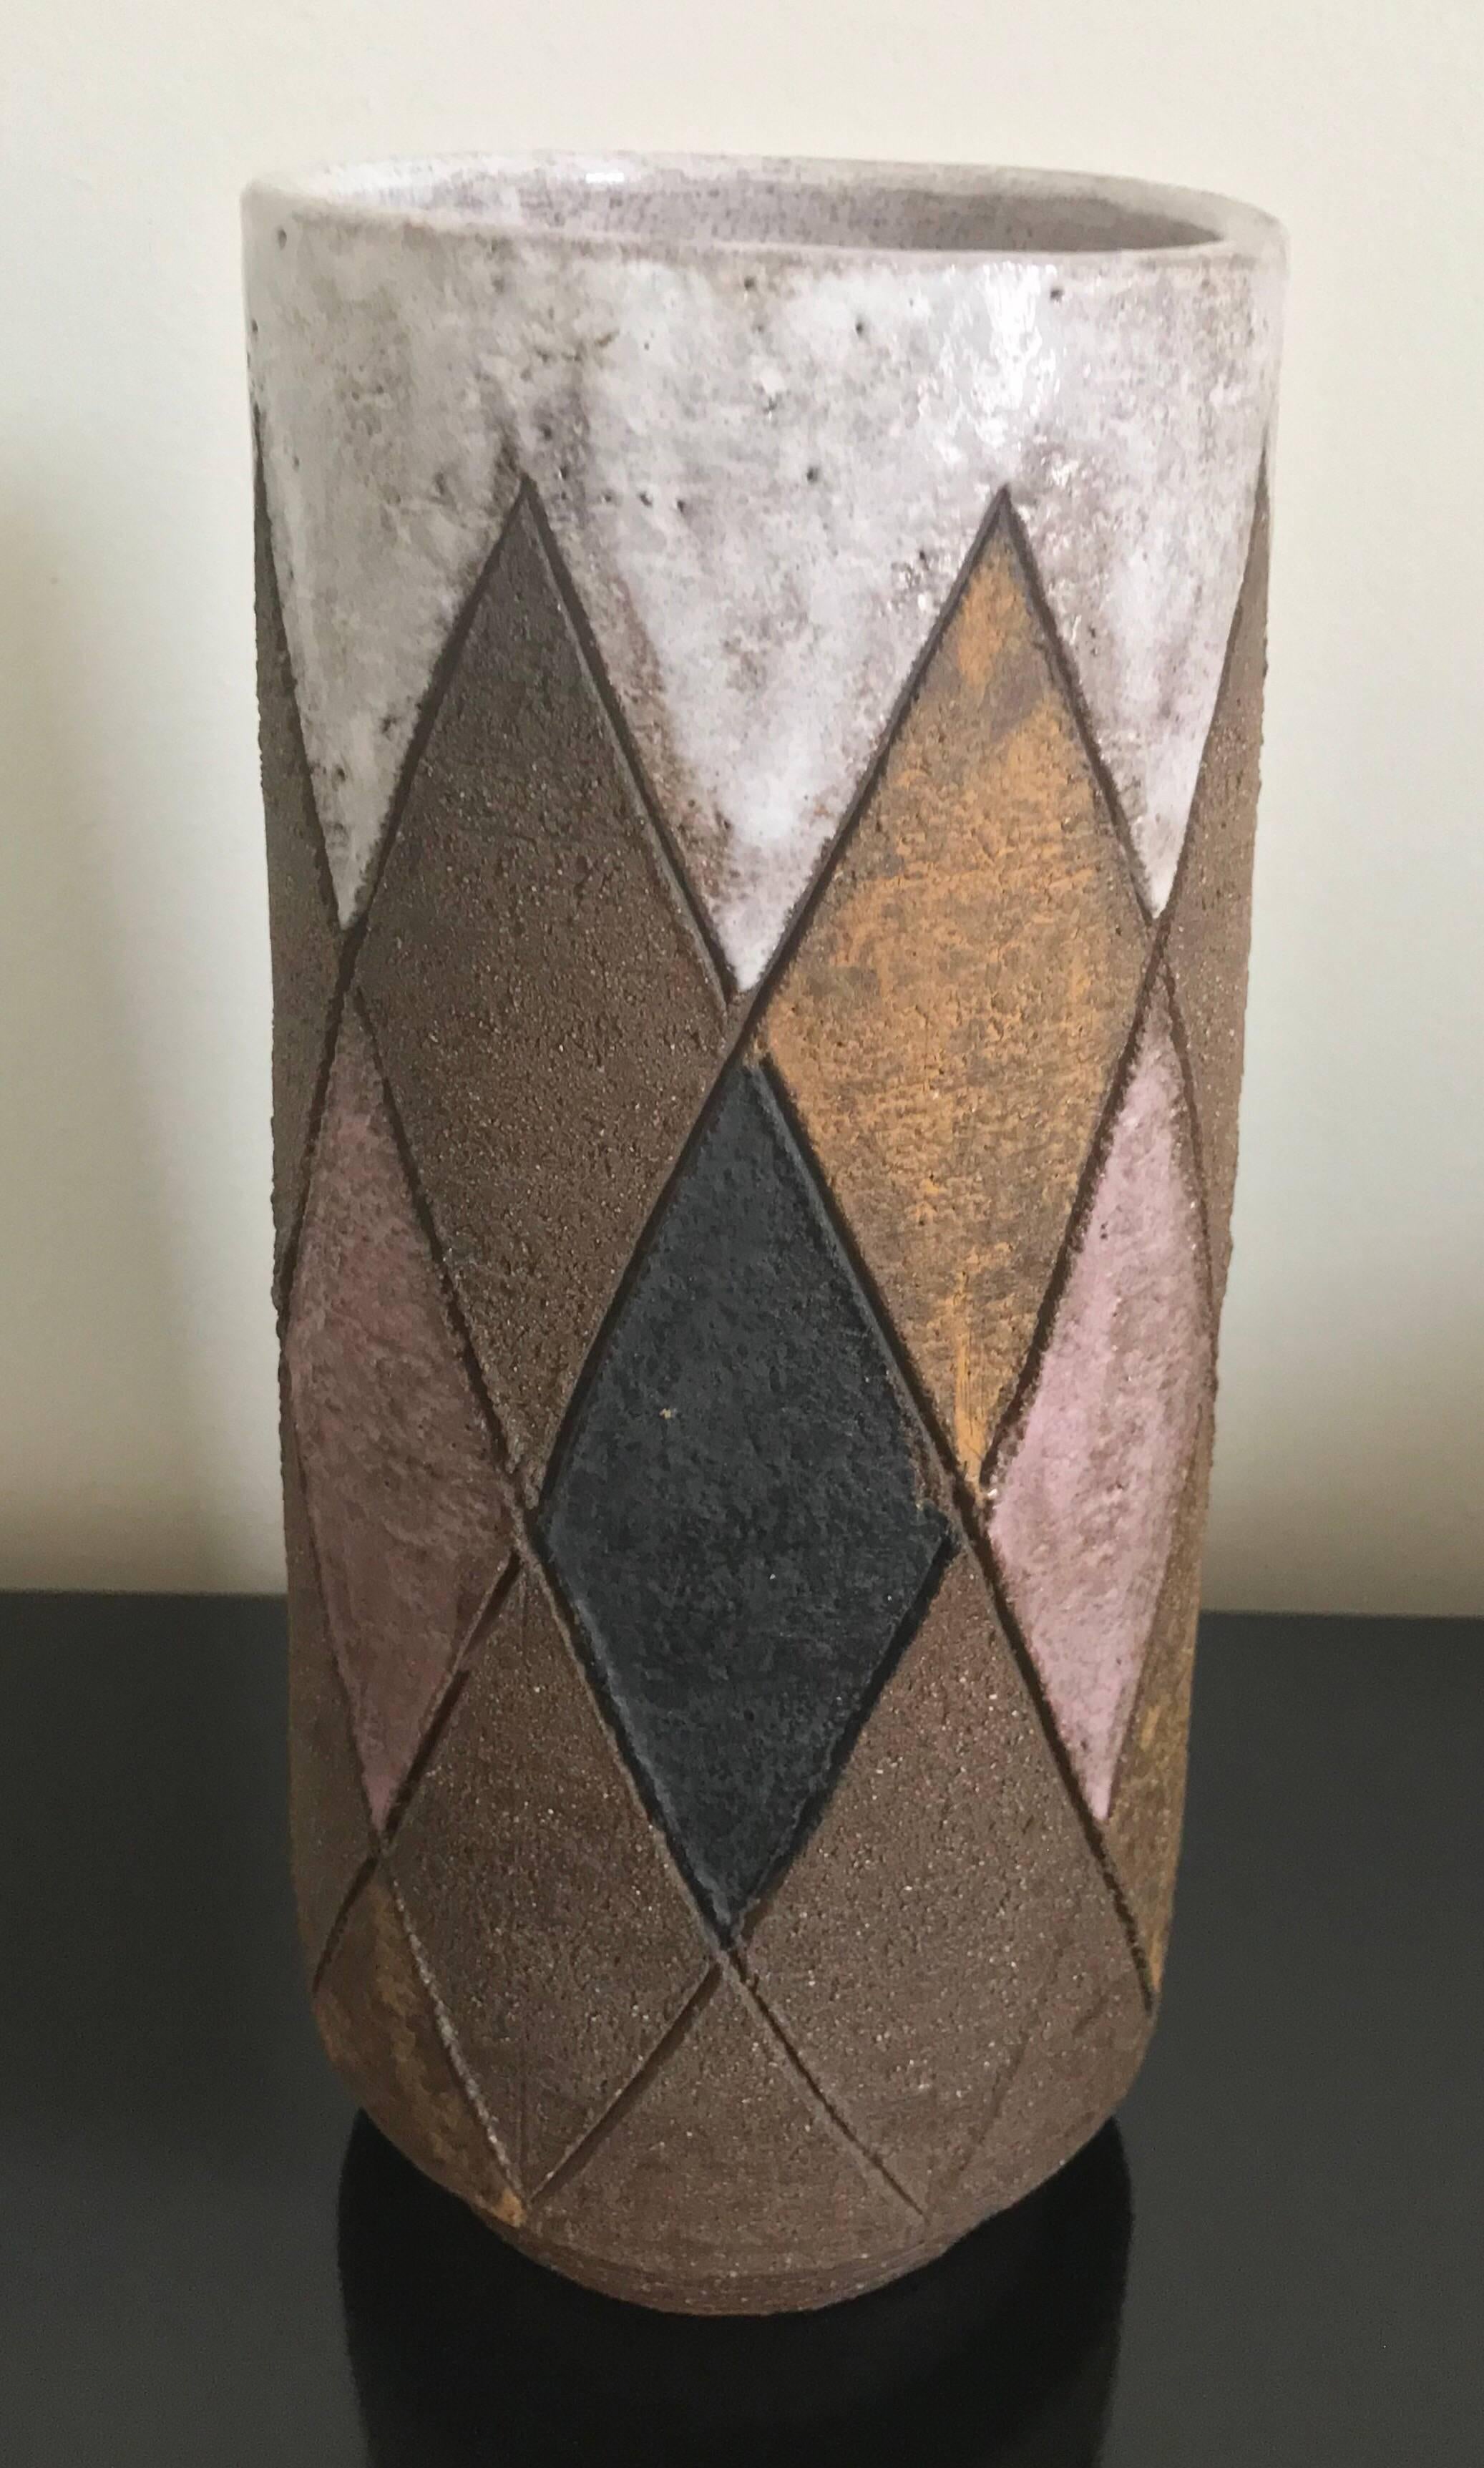 Bitossi Aldo Londi for Raymor art pottery vase with a harlequin pattern design, Italy, 1960s.